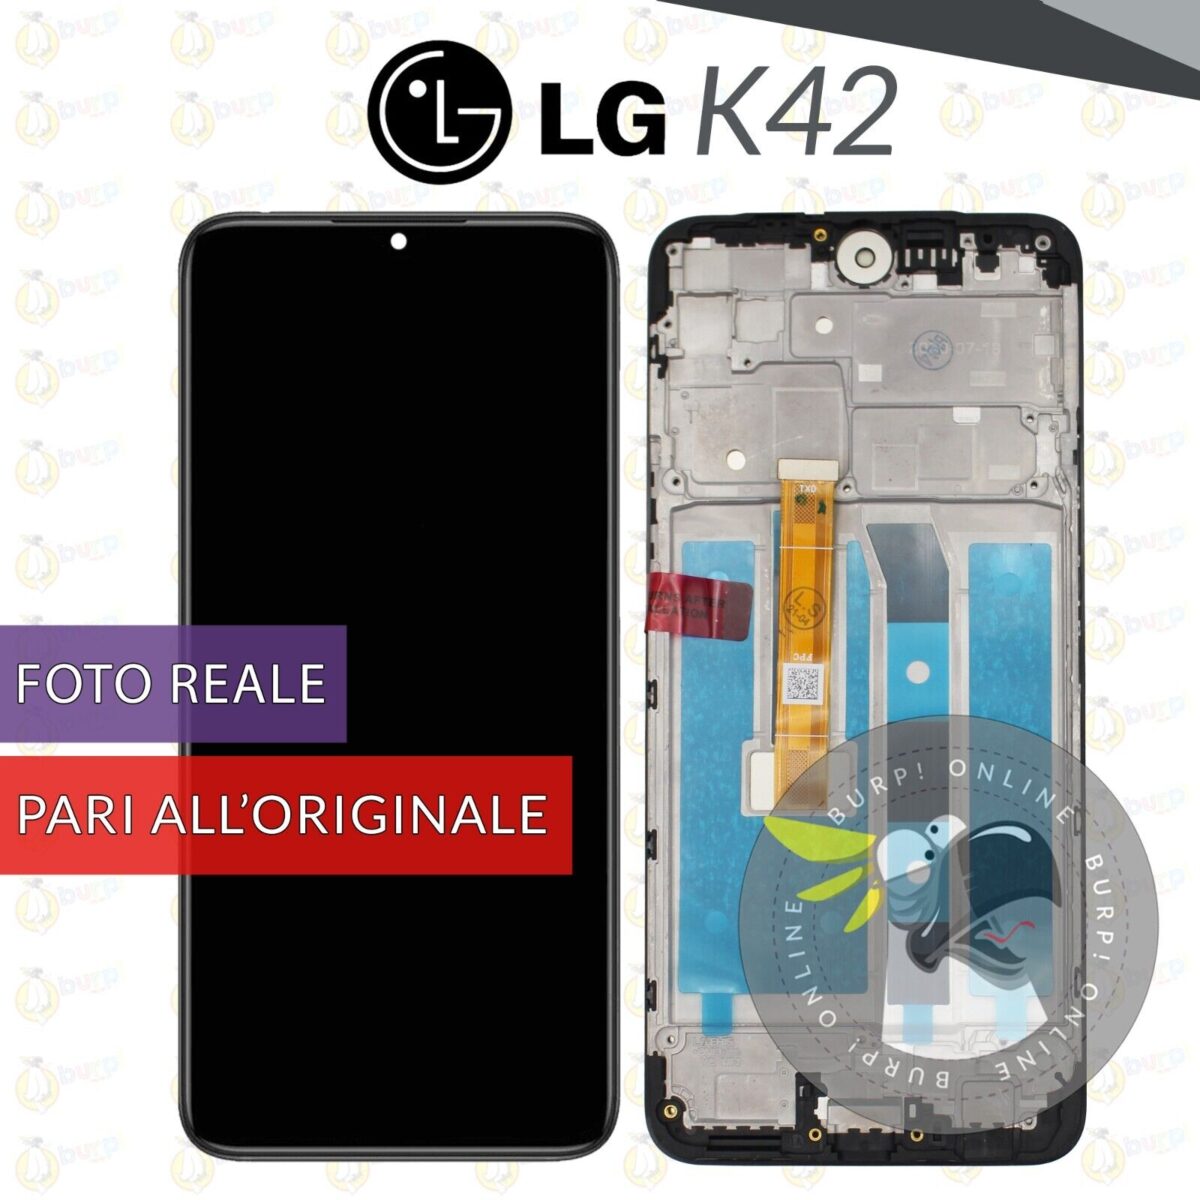 DISPLAY PARI ORIGINALE LG K42 LMK420EMW SCHERMO LCD VETRO TOUCH SCREEN FRAME 234613283386